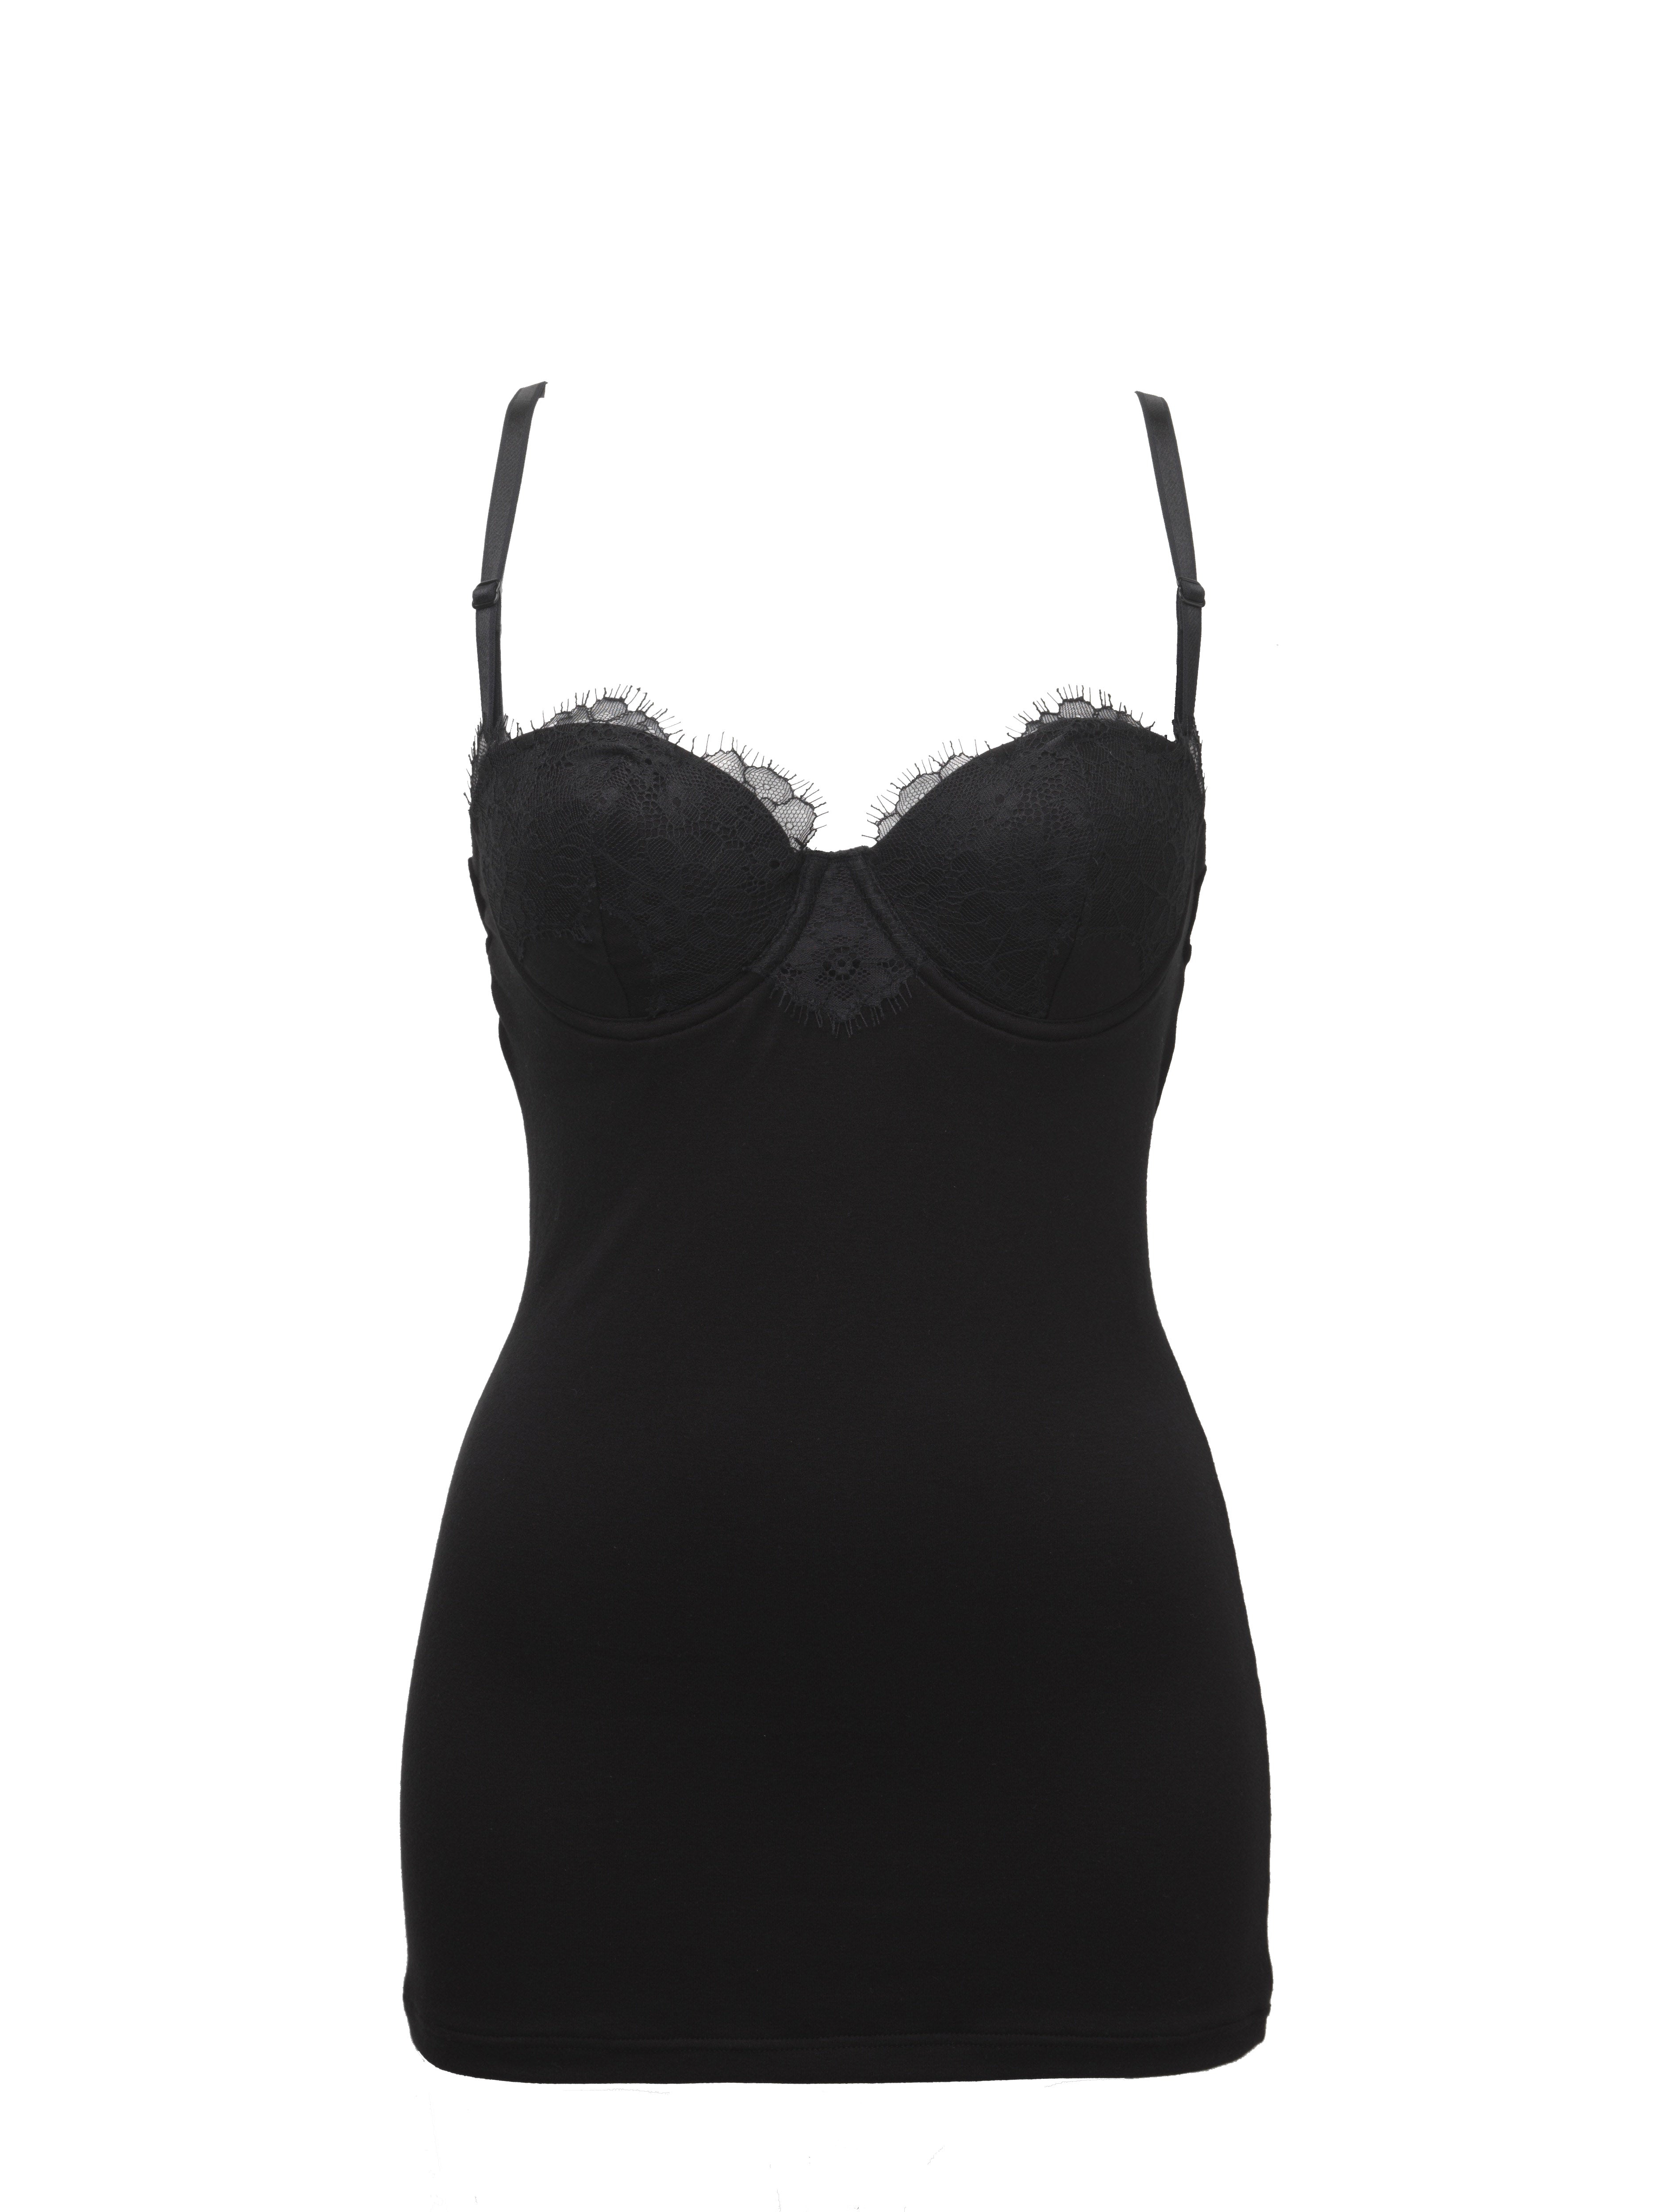 INNERWEAR | wired bra with camisole - BLACK – AKIKO OGAWA. Lingerie